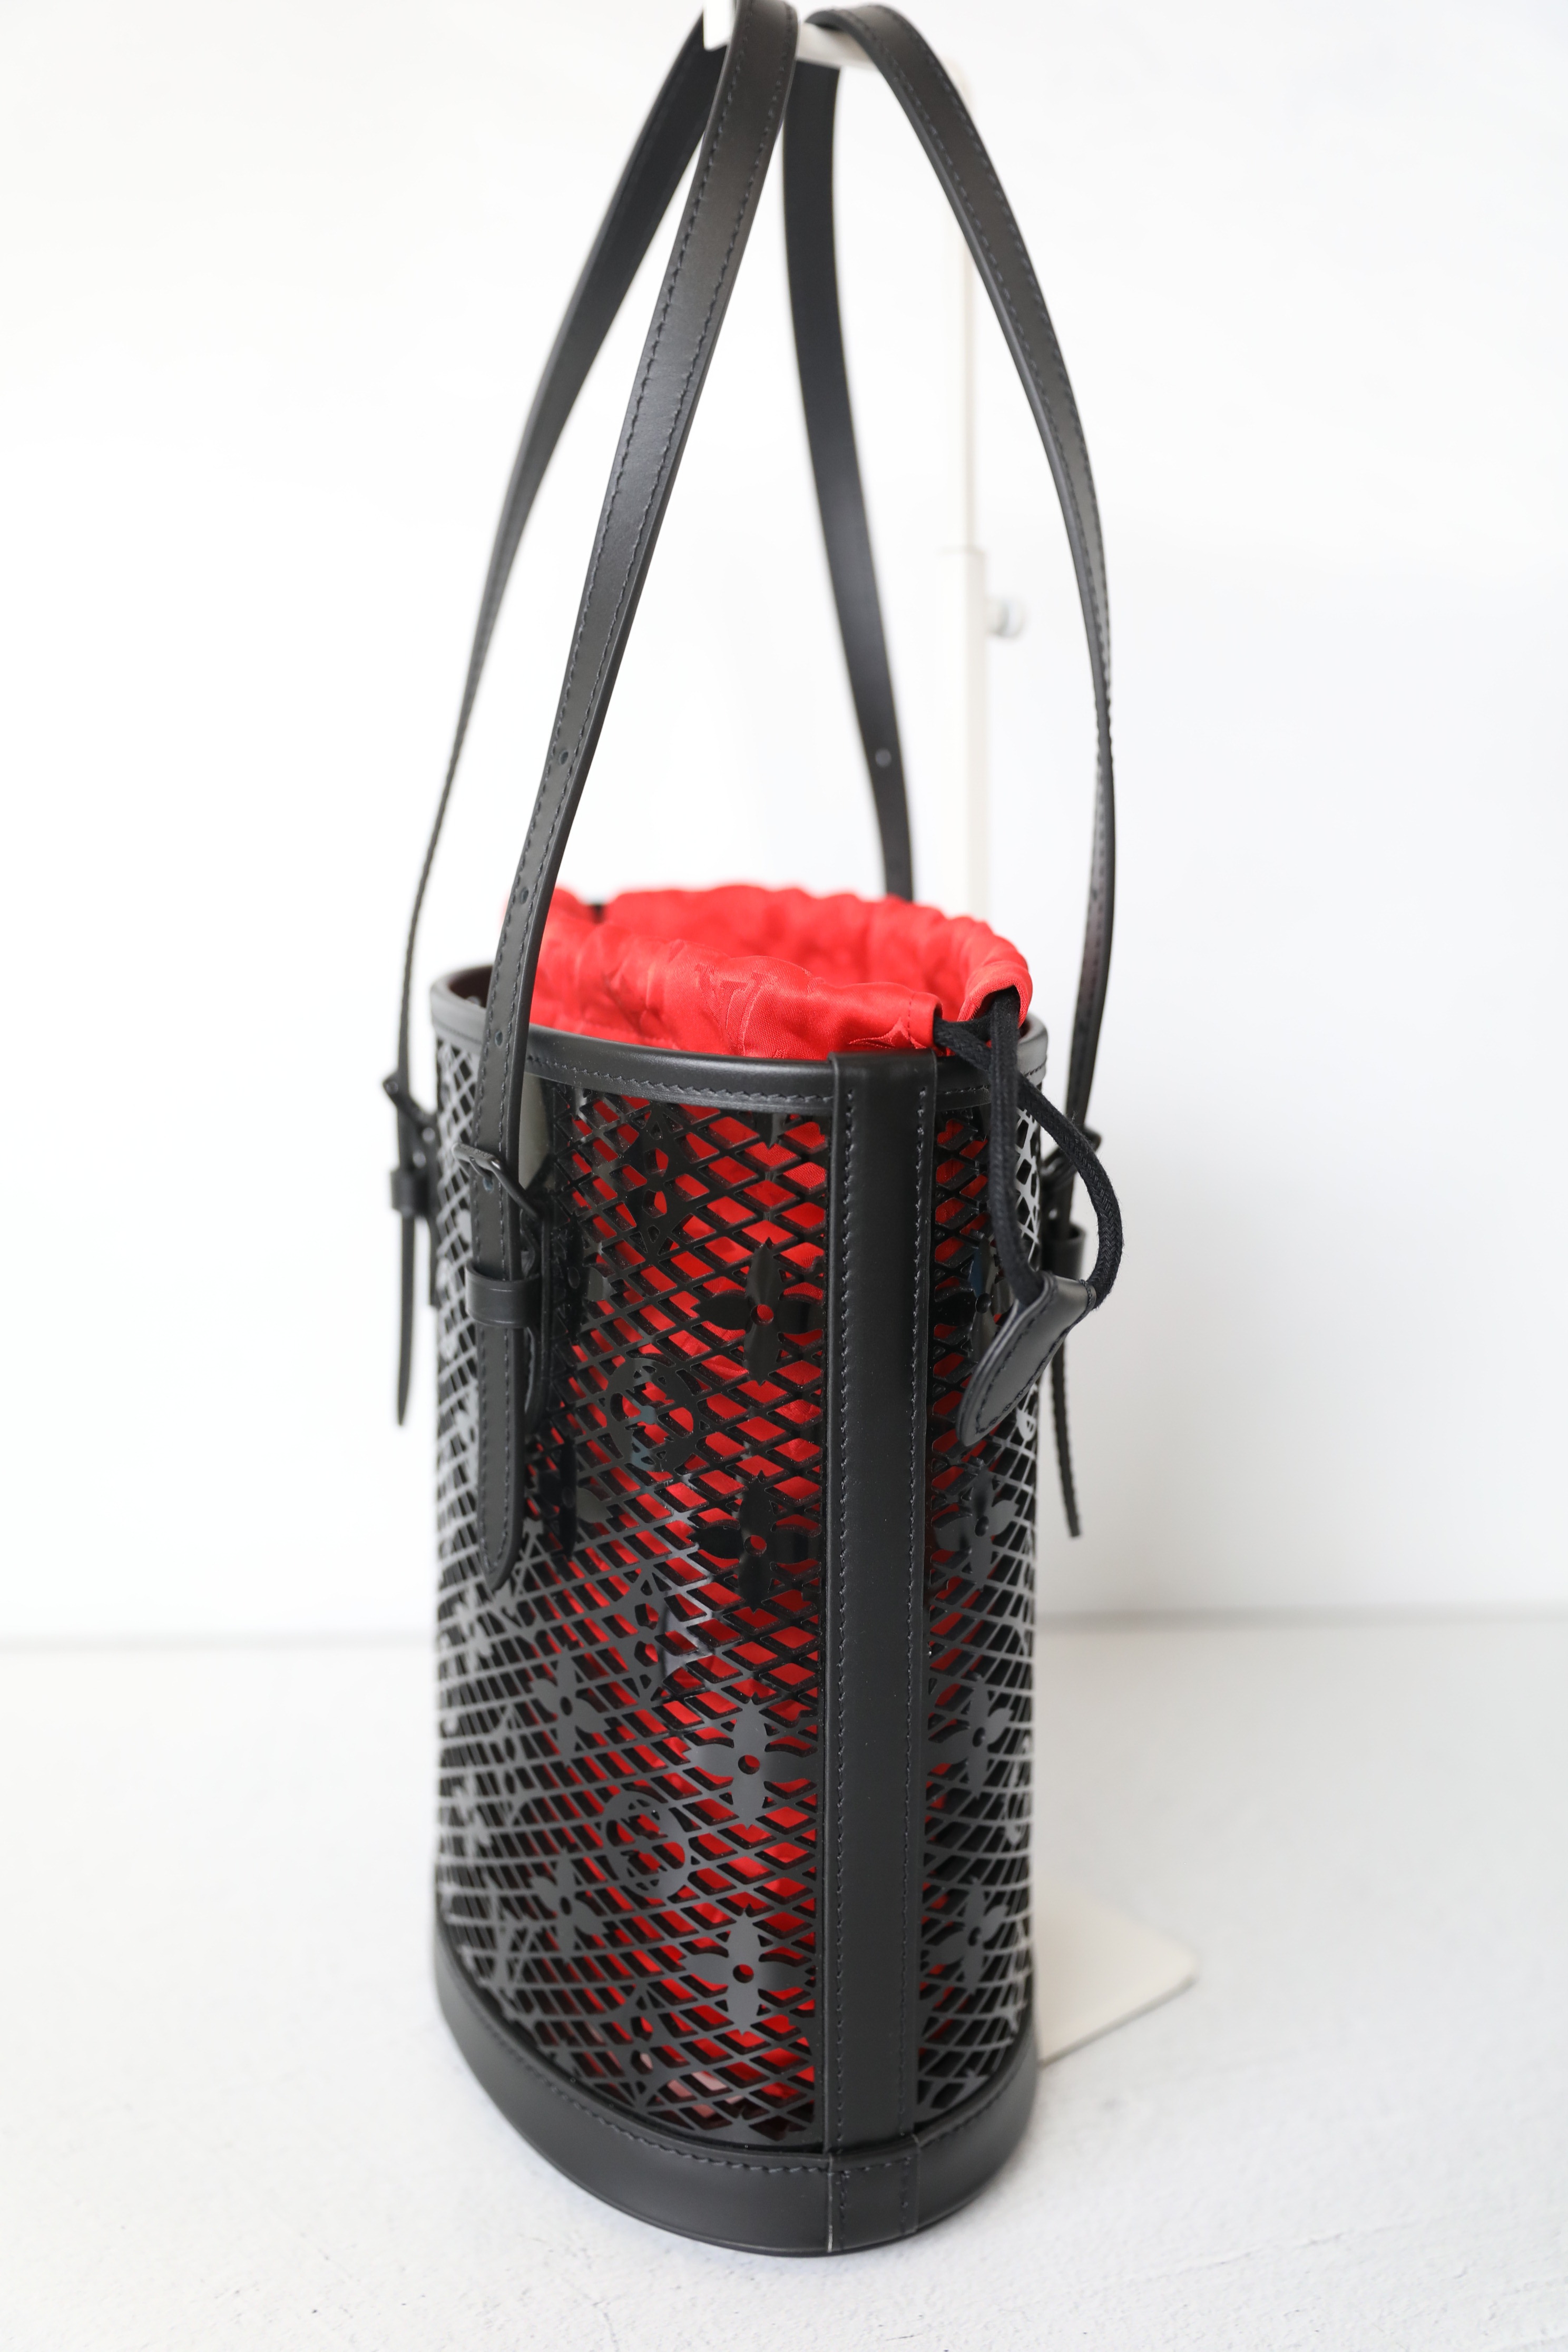 Louis Vuitton Muria Bucket Bag, New in Dustbag - Julia Rose Boston